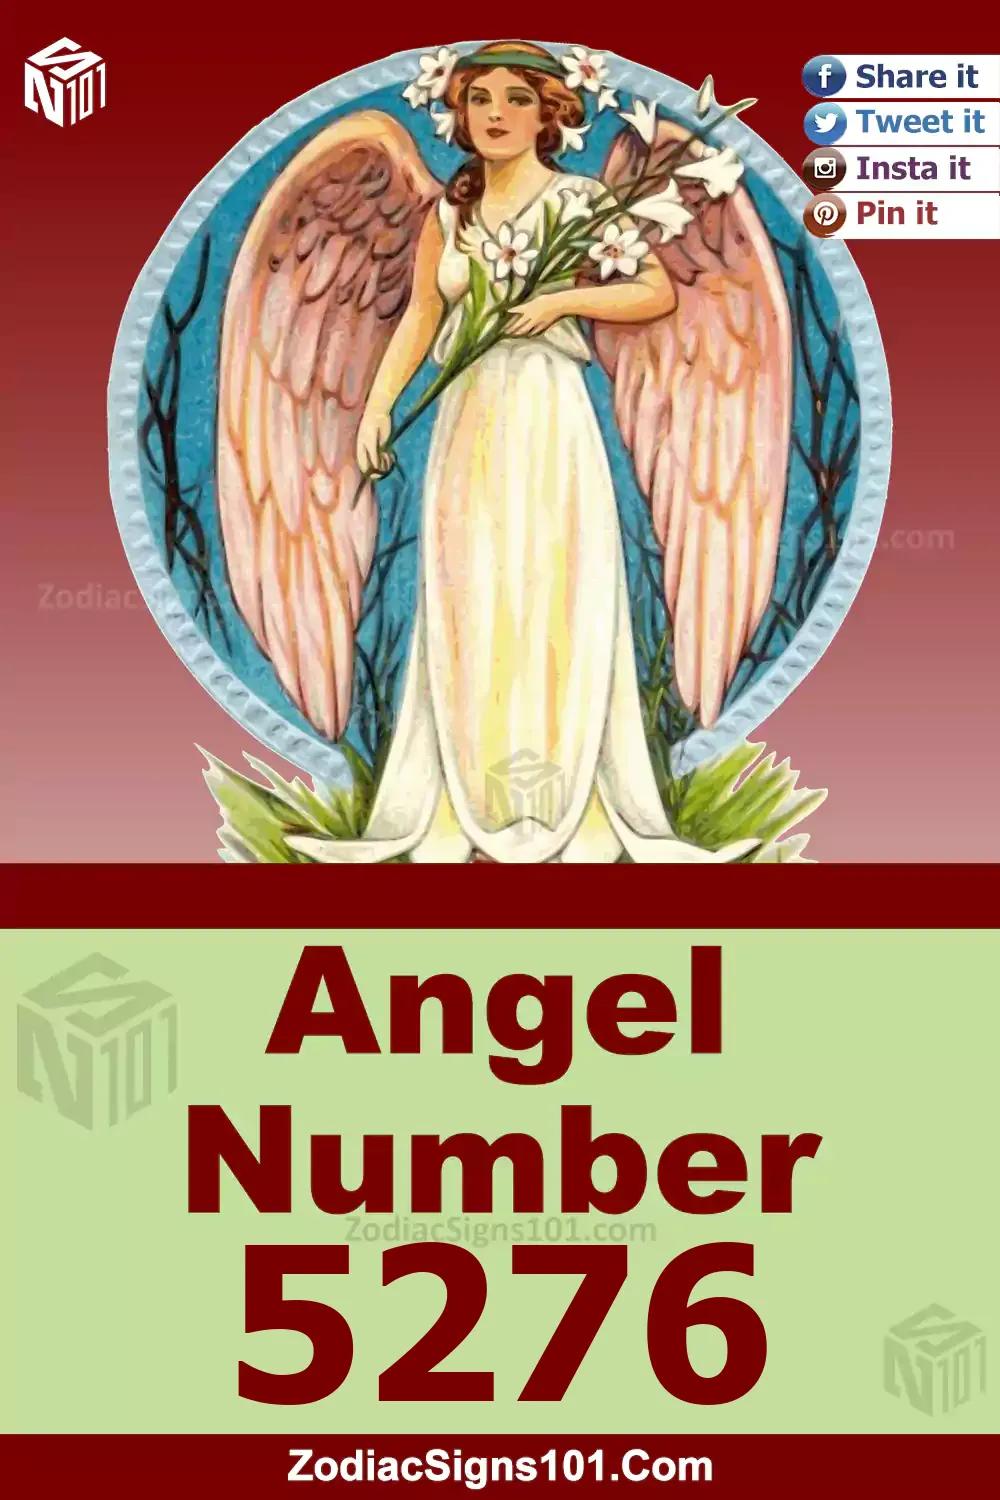 5276-Angel-Number-Meaning.jpg